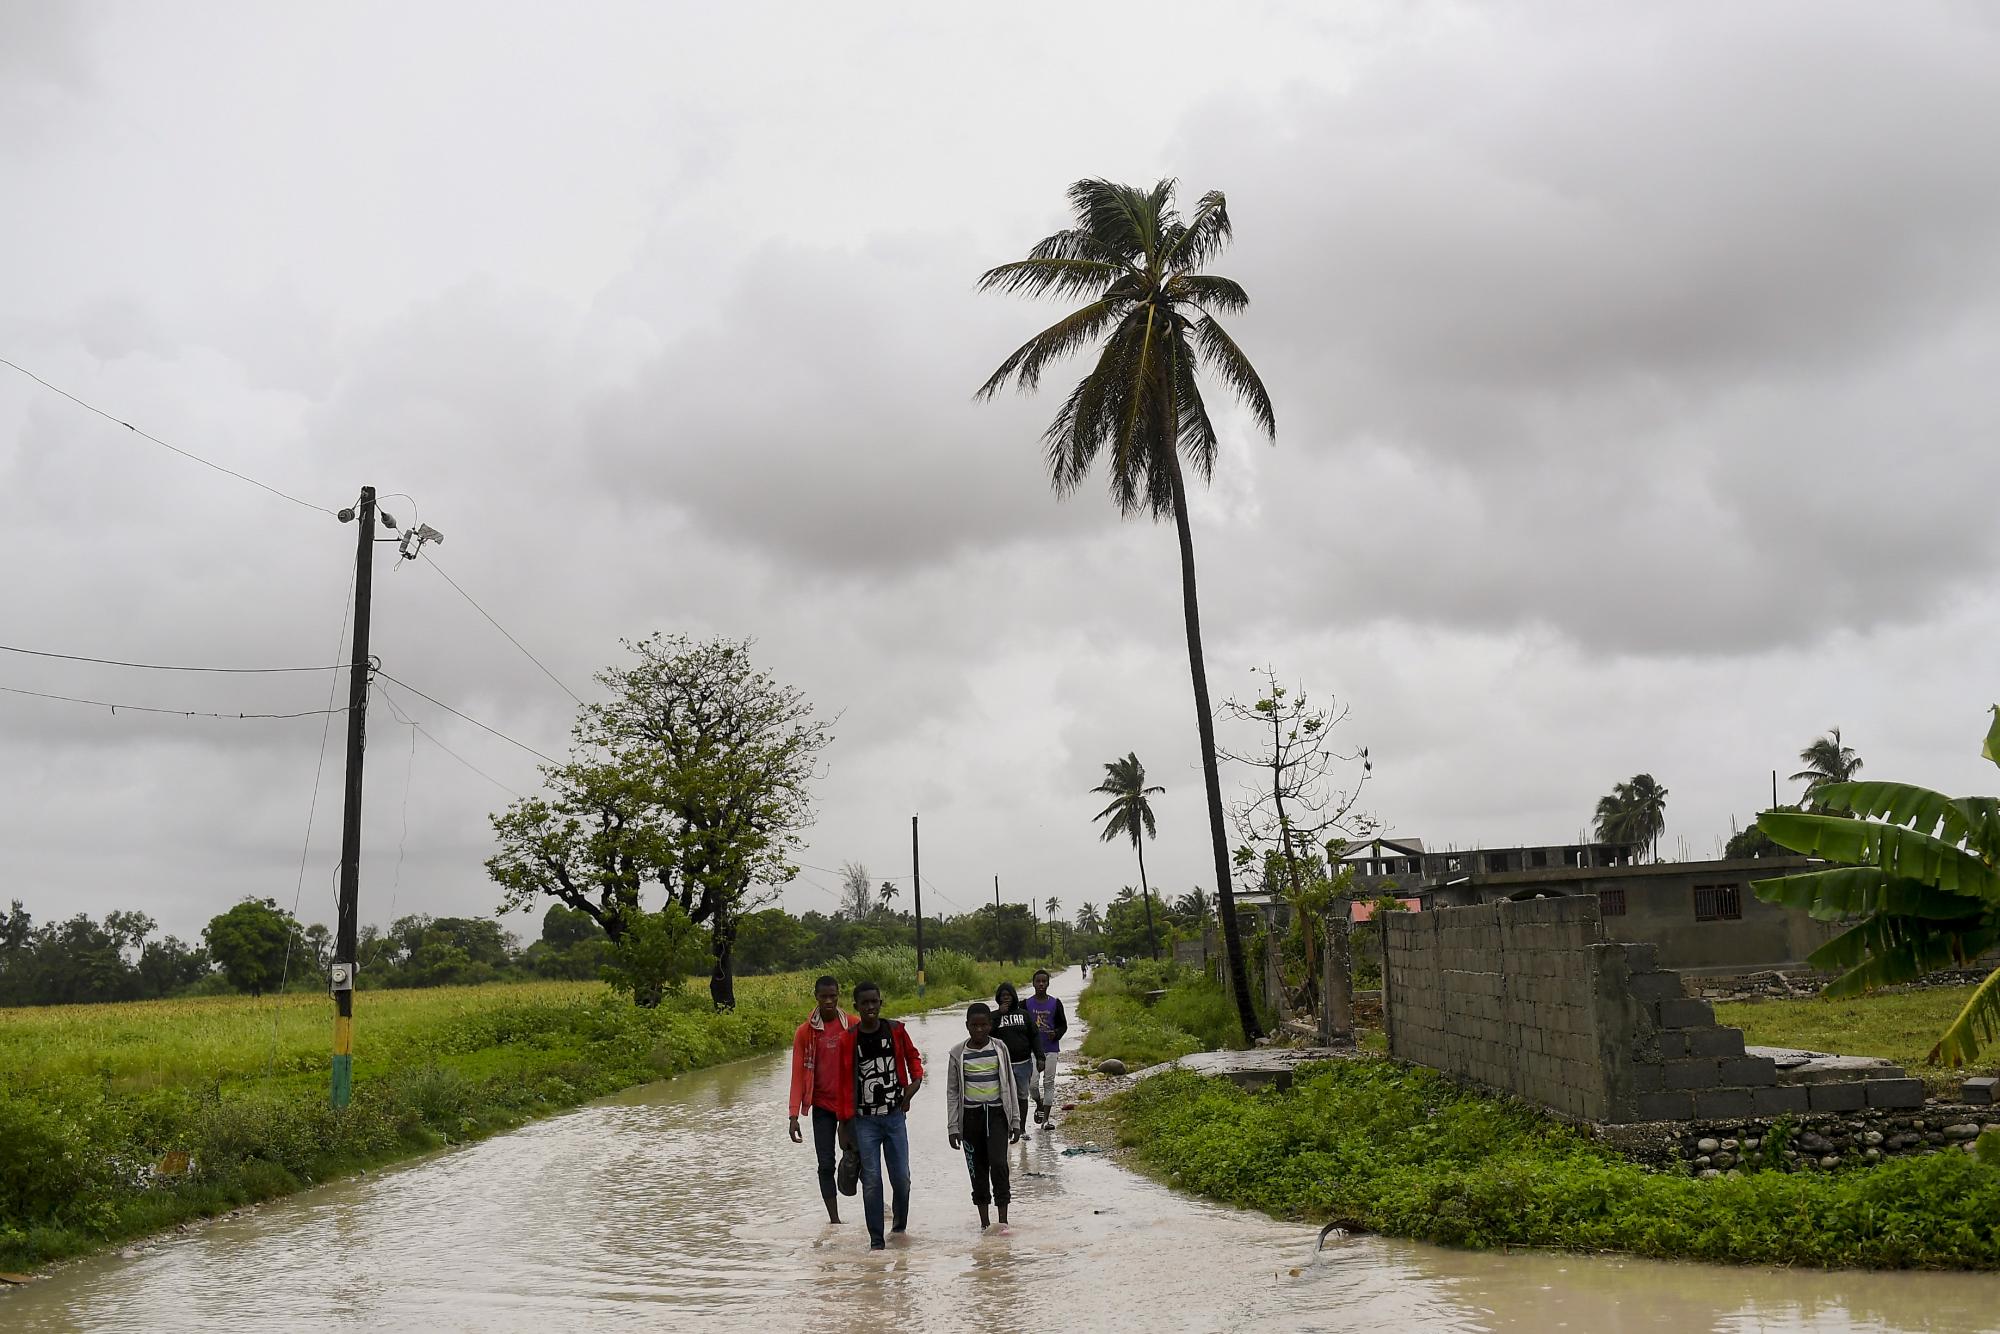 Los residentes atraviesan una carretera inundada la mañana después de que la tormenta tropical Grace azotara Trou Mahot, Haití, el martes 17 de agosto de 2021, tres días después de un terremoto de magnitud 7,2. (AP Photo/Matias Delacroix)